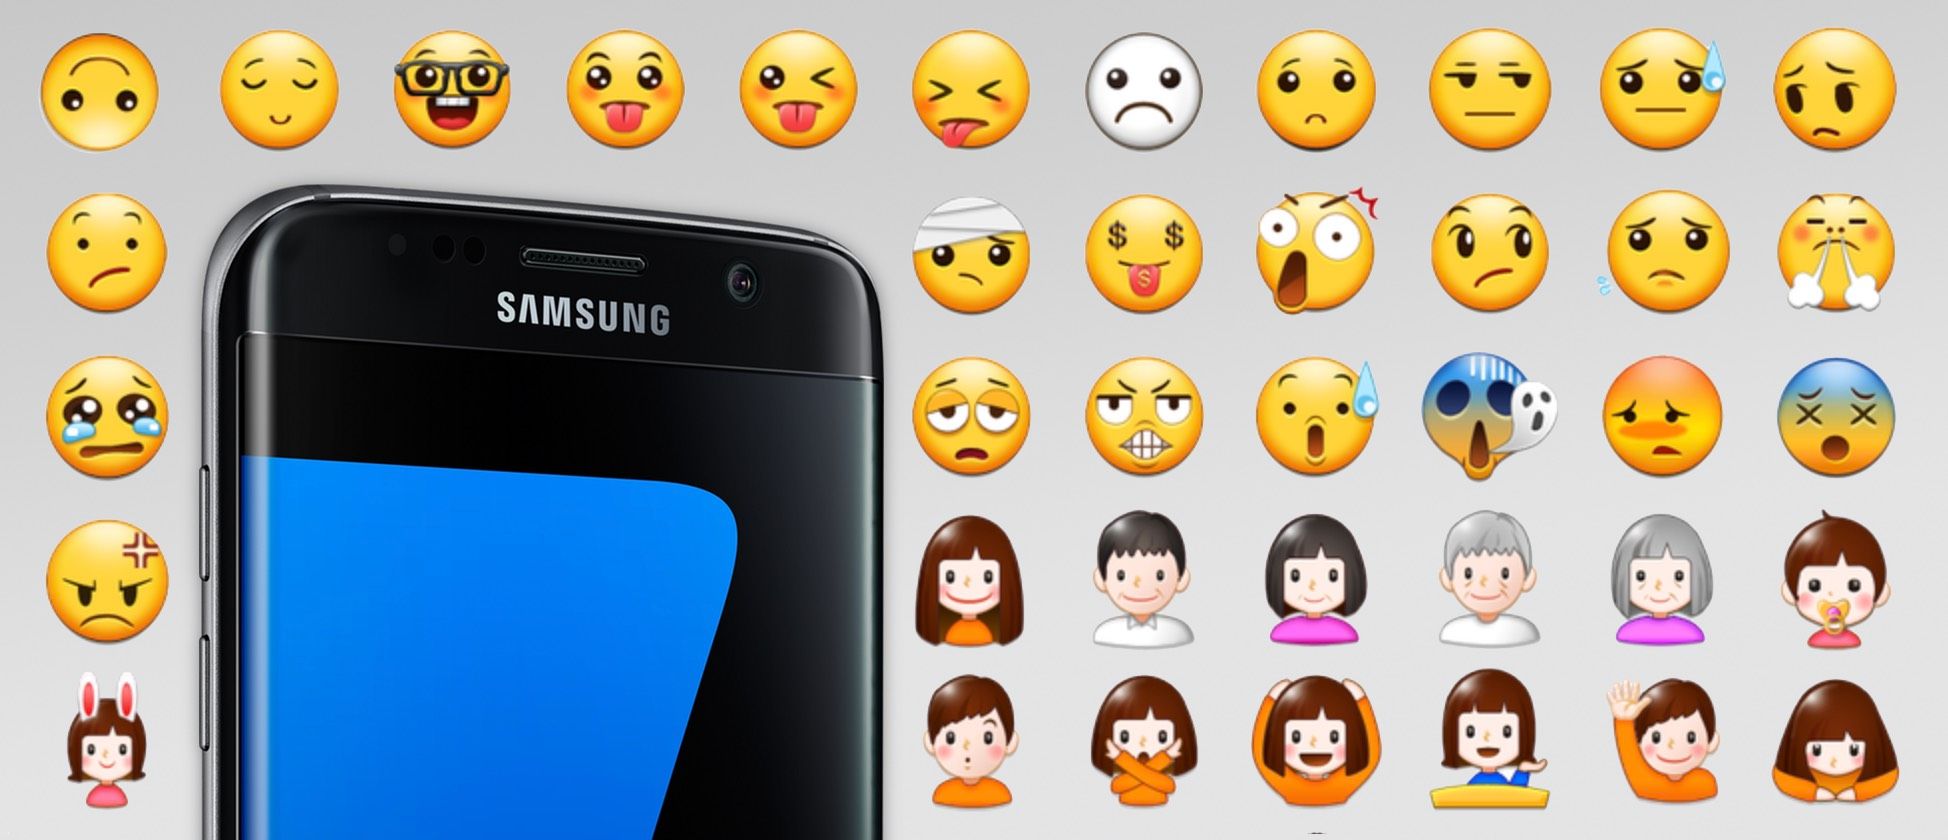 Samsung Galaxy S7 Emoji Changelog